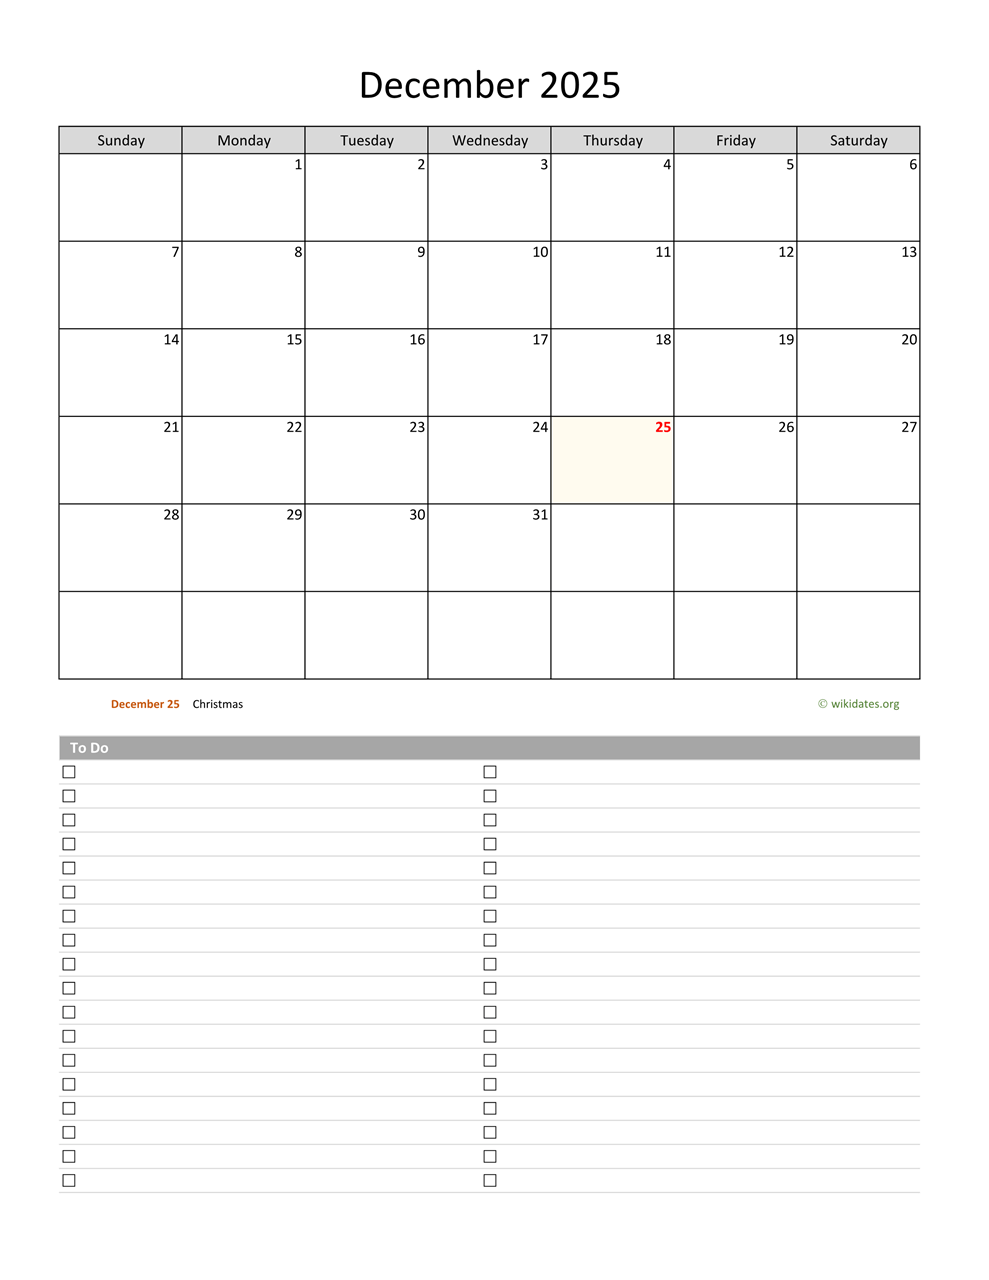 december-2025-calendar-with-to-do-list-wikidates